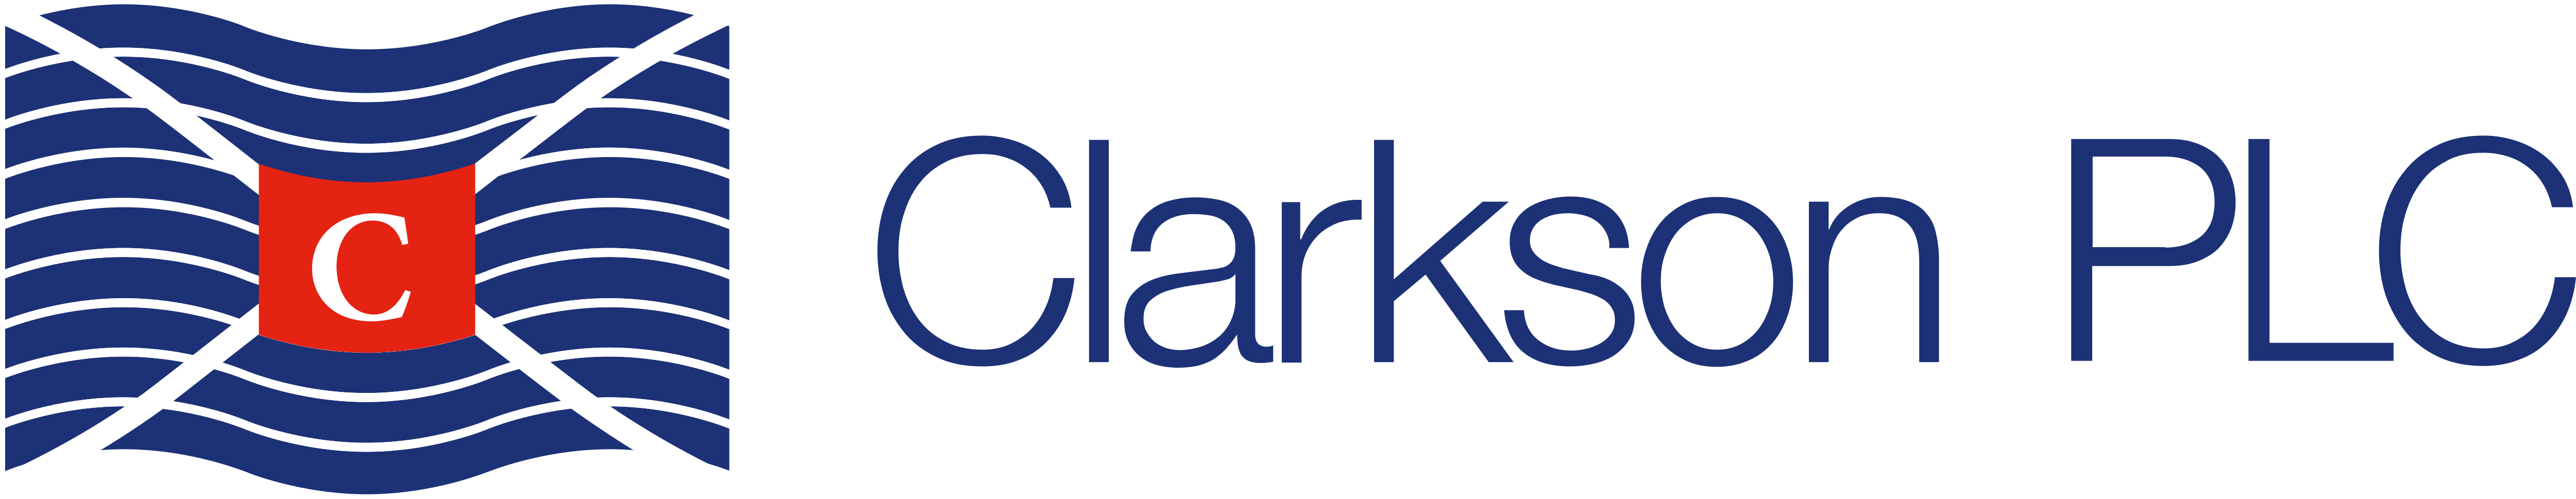 Clarkson Plc – Logos Download